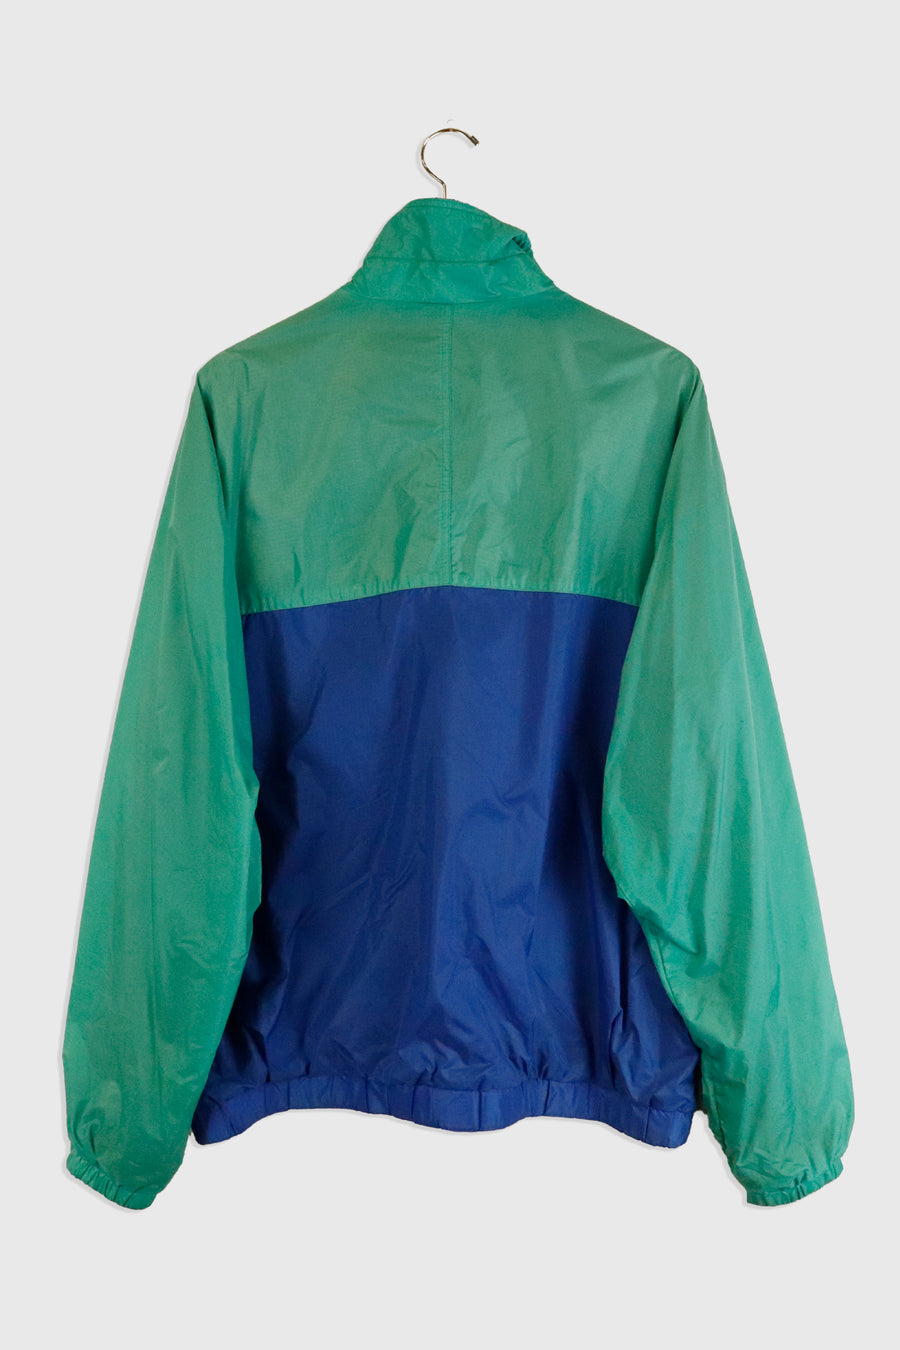 Vintage Patagonia Fleece Lined Full Zip Quarter Collar Jacket Sz XL